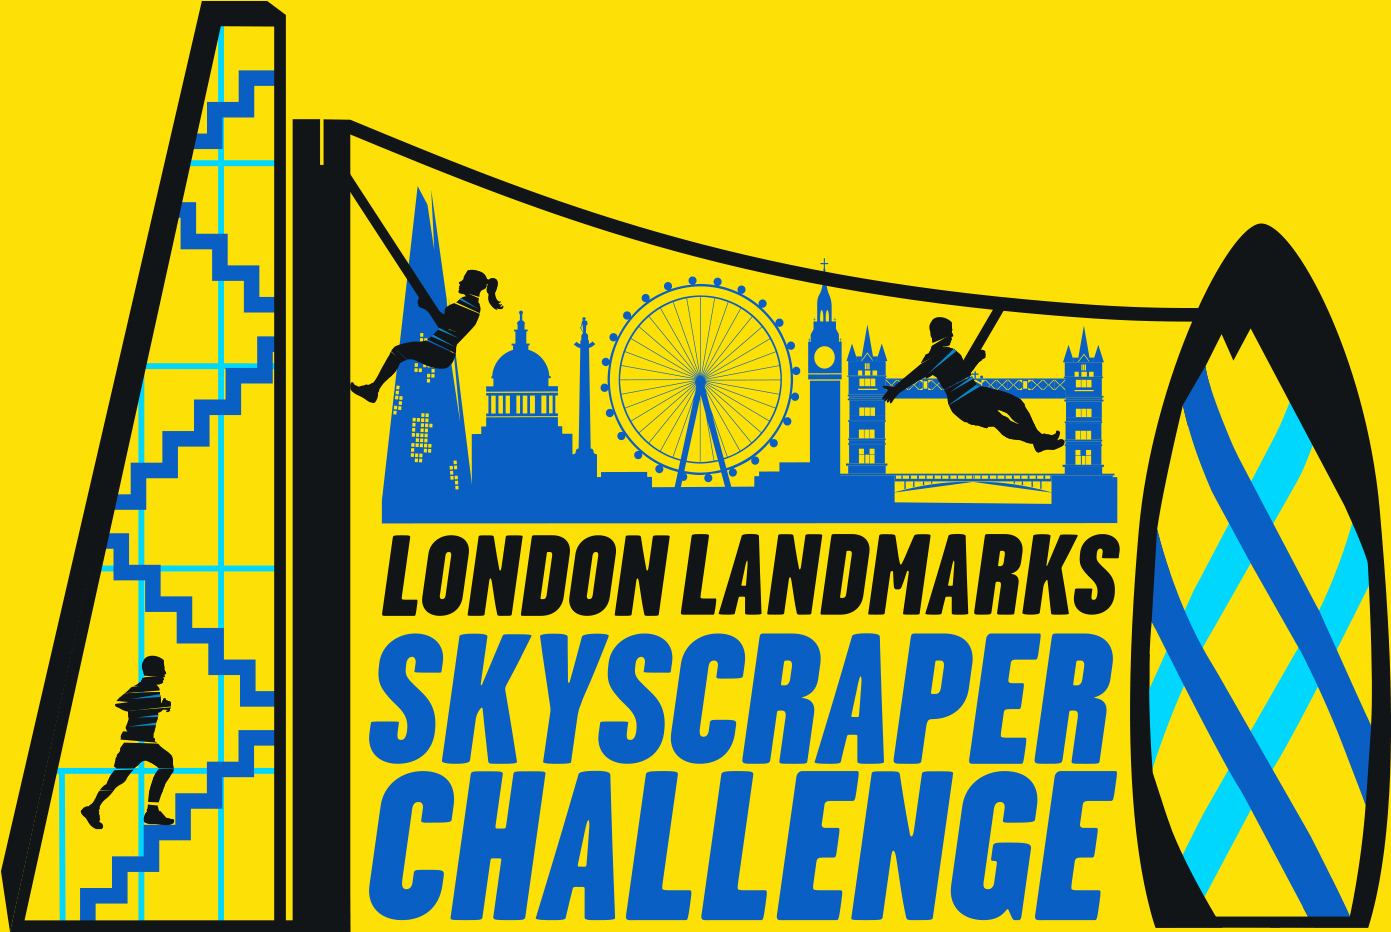 London Landmarks Skyscraper Challenge